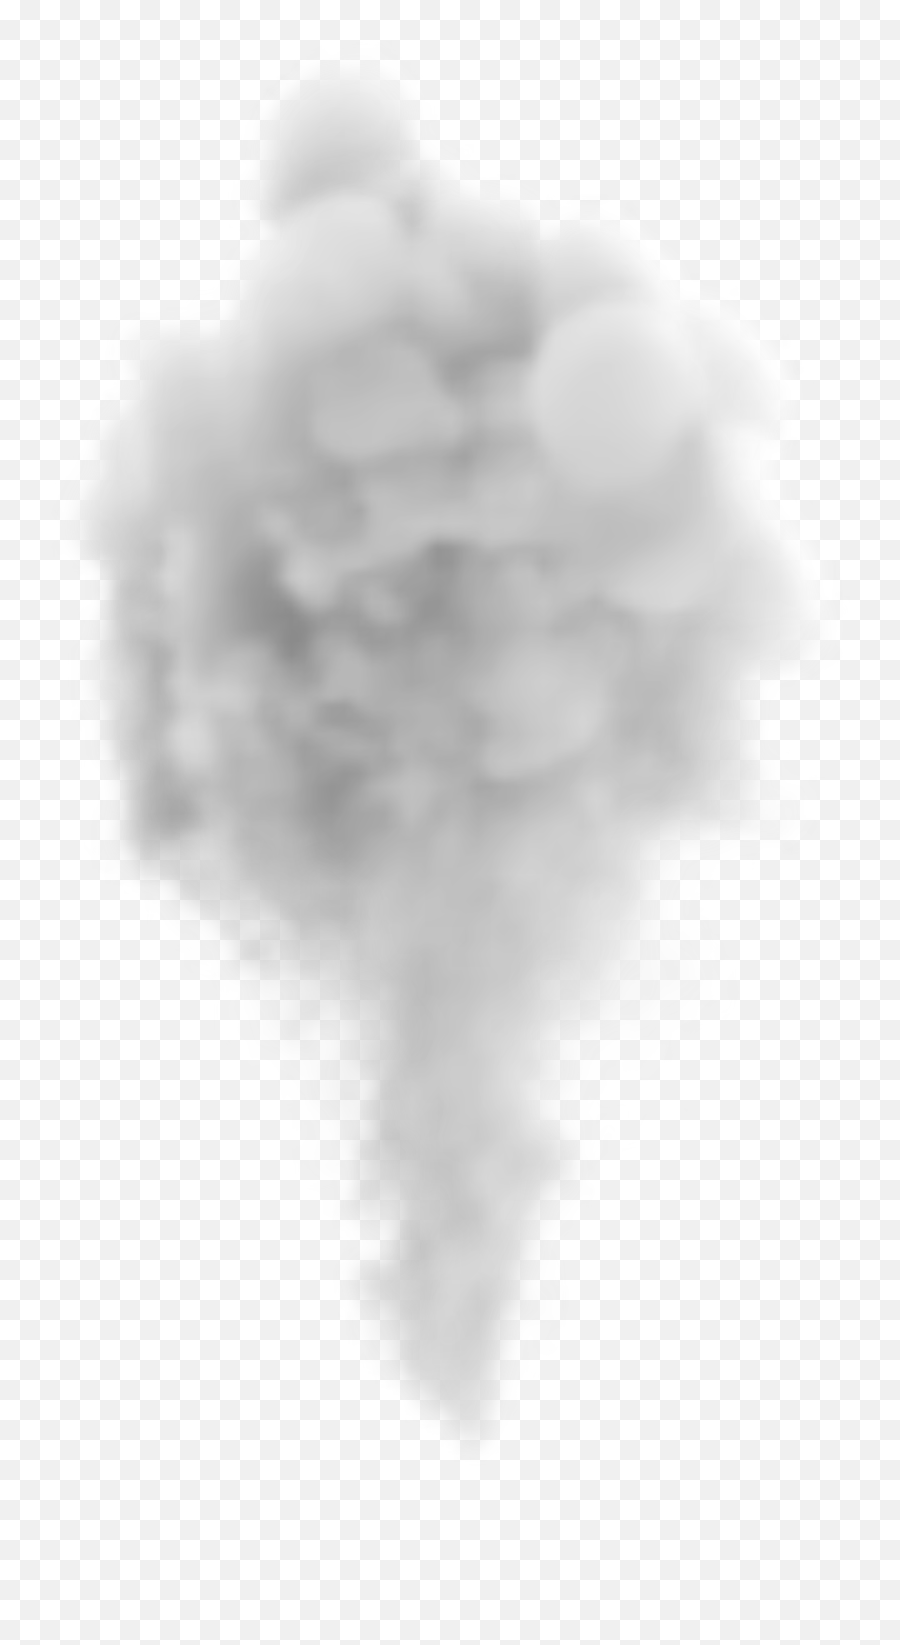 Exhaust Smoke Png 2 Image - Transparent Transparent Background Smoke Clipart,Exhaust Smoke Png